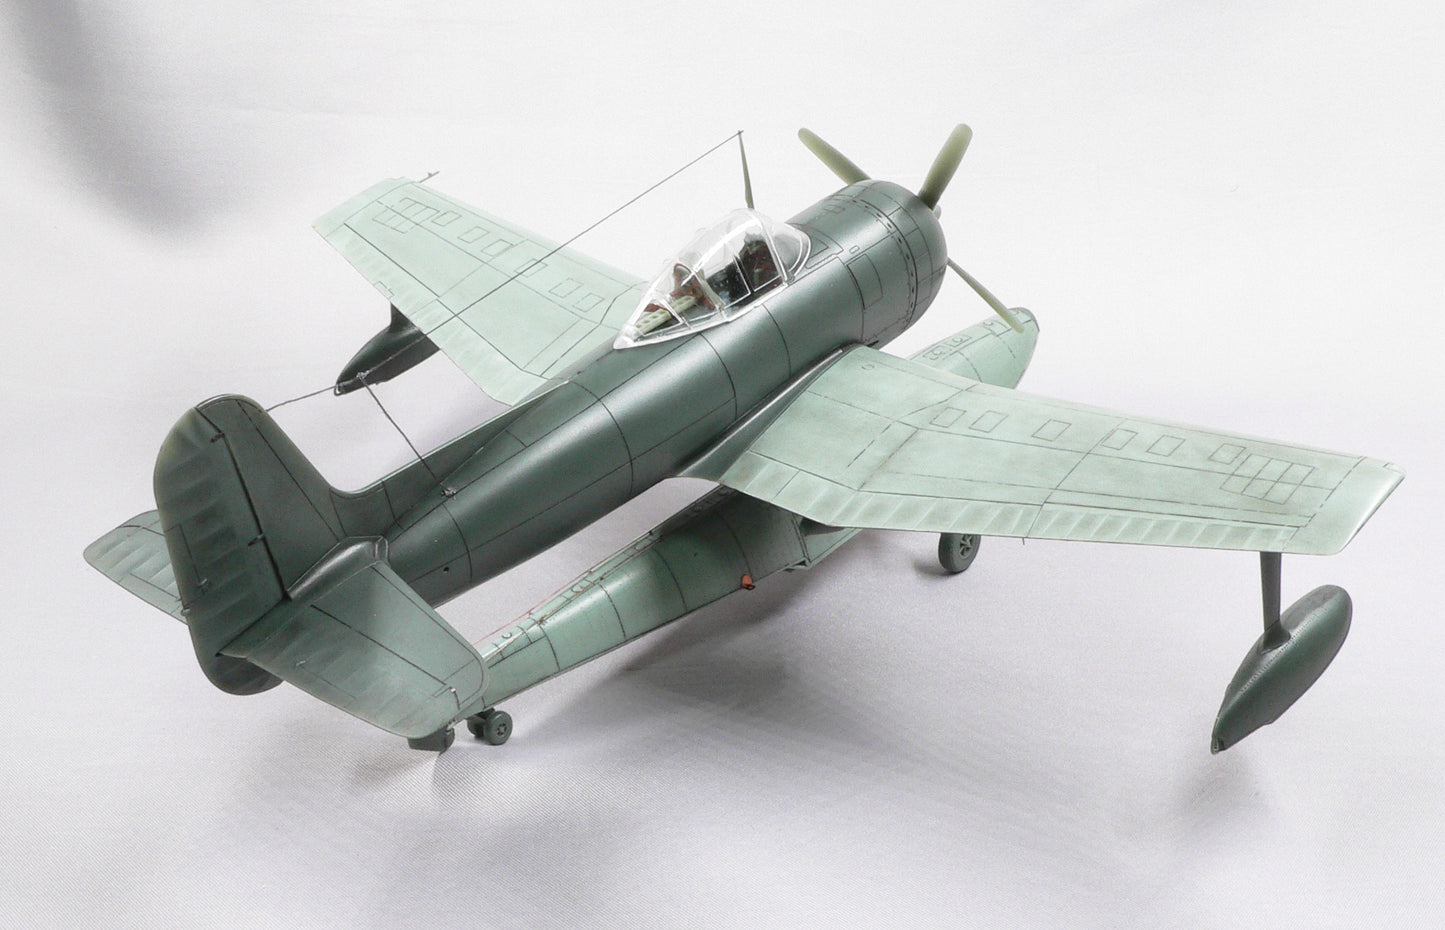 Curtiss SC-1 Seahawk 1/48 scale model kit